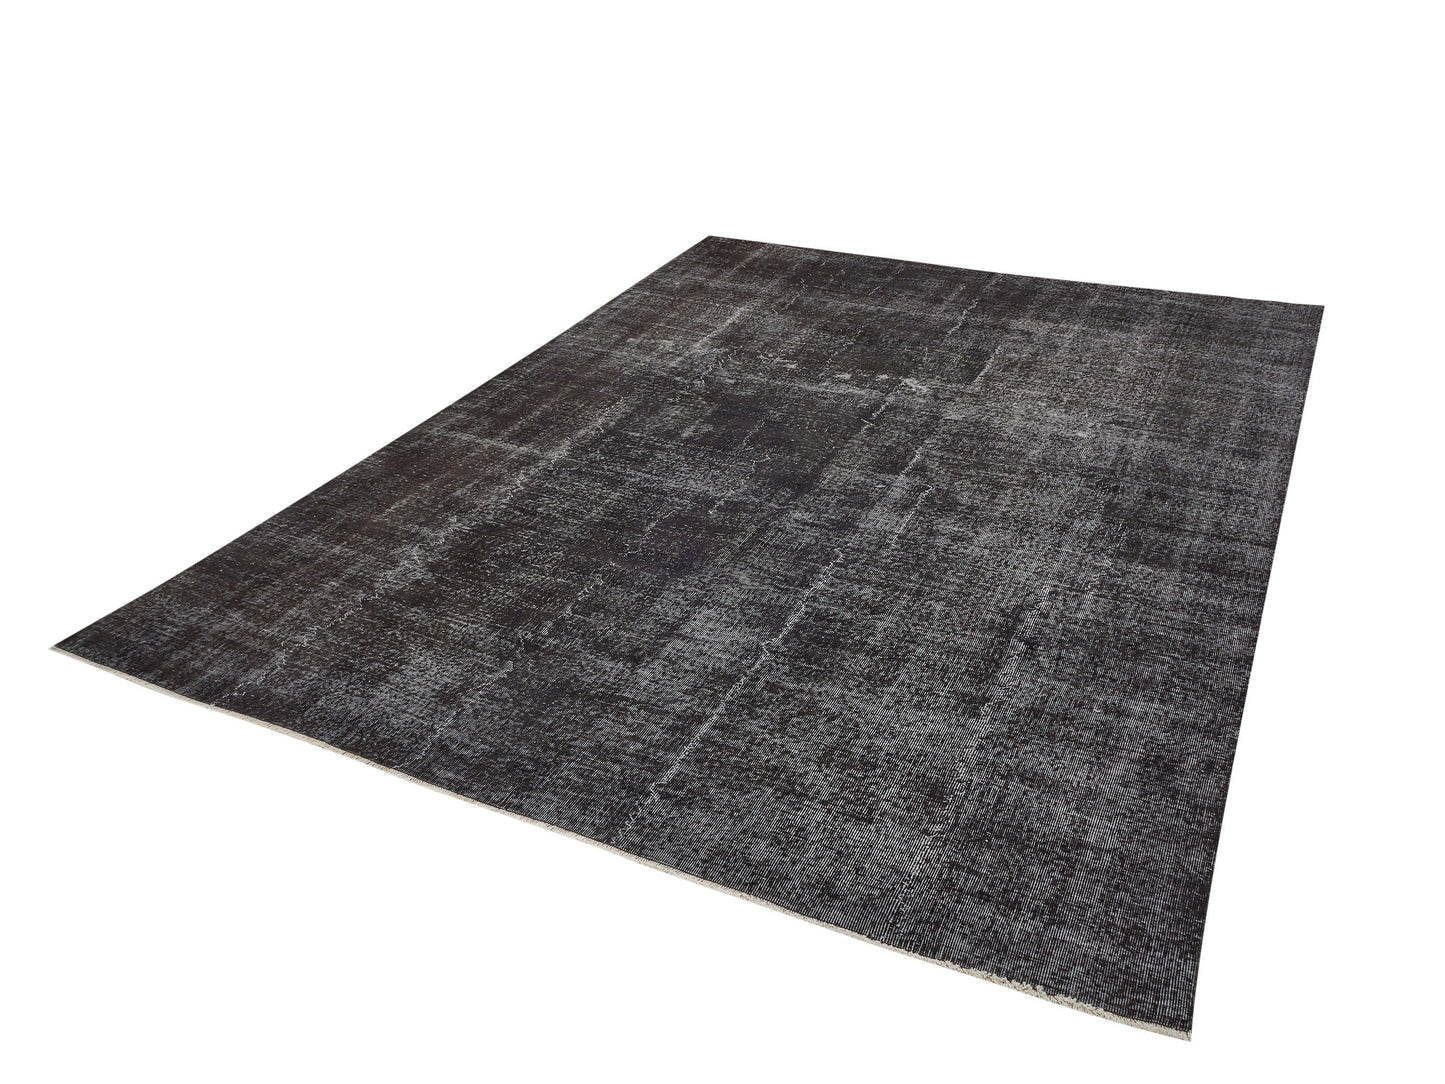 Black Area Large rug, Black Carpet rug 8x11, Turkish Rug, Vintage rug, Distressed rug, Unique rug, Contemporary decor, Handmade rug, 9600